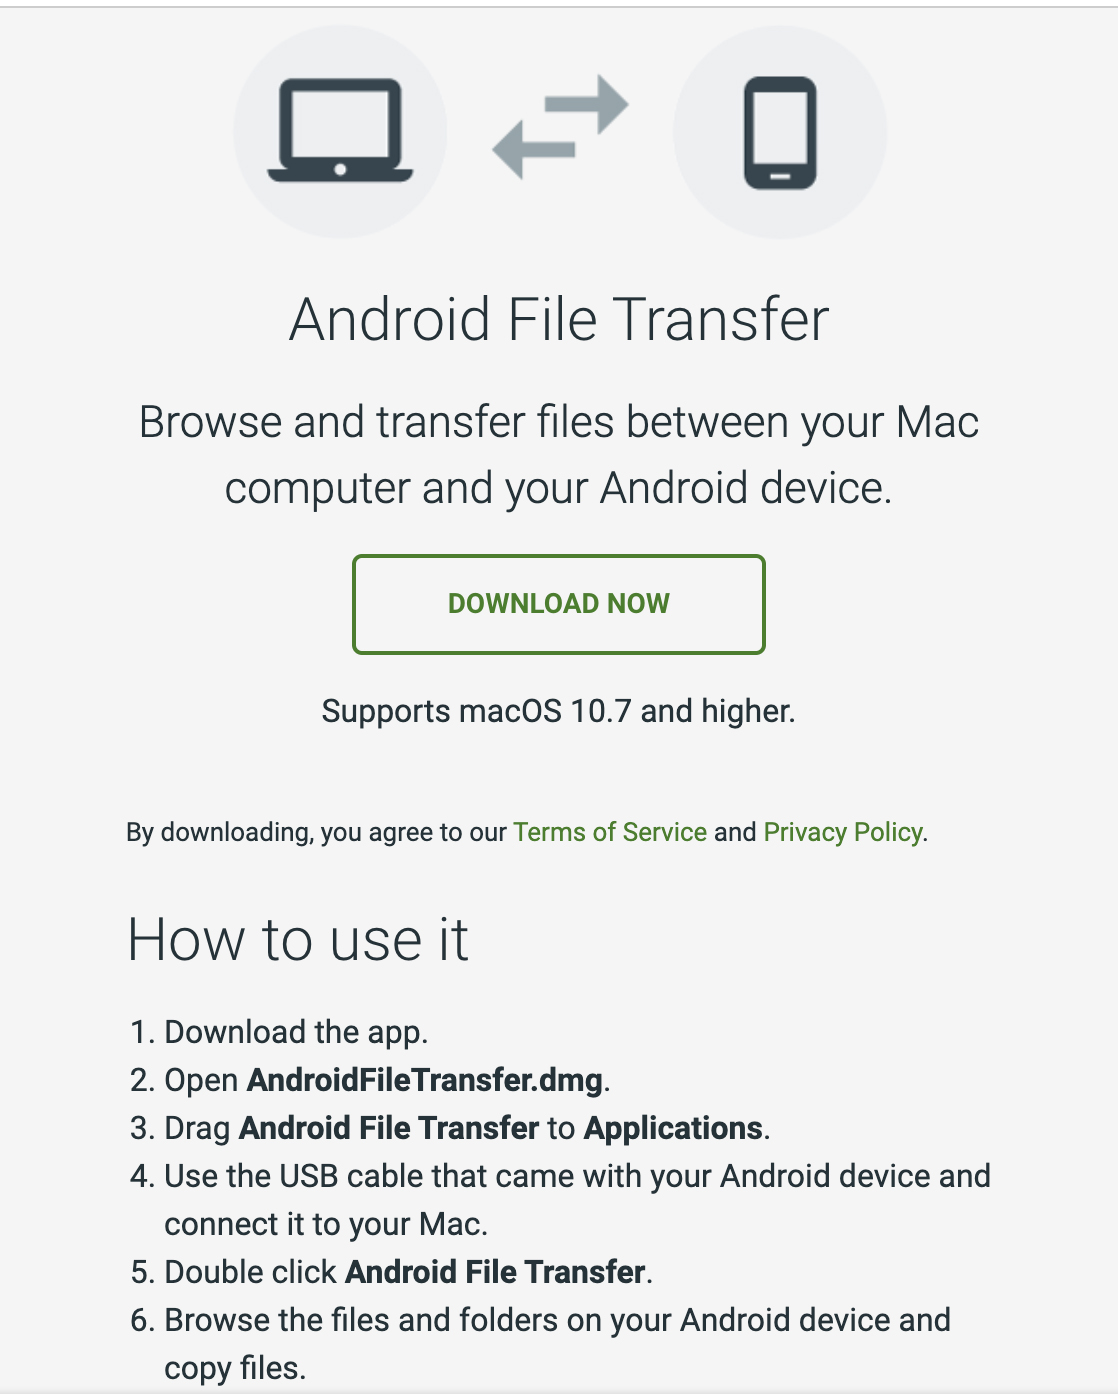 Android File Transfer 안드로이드 파일 전송 앱 다운로드 및 사용 방법